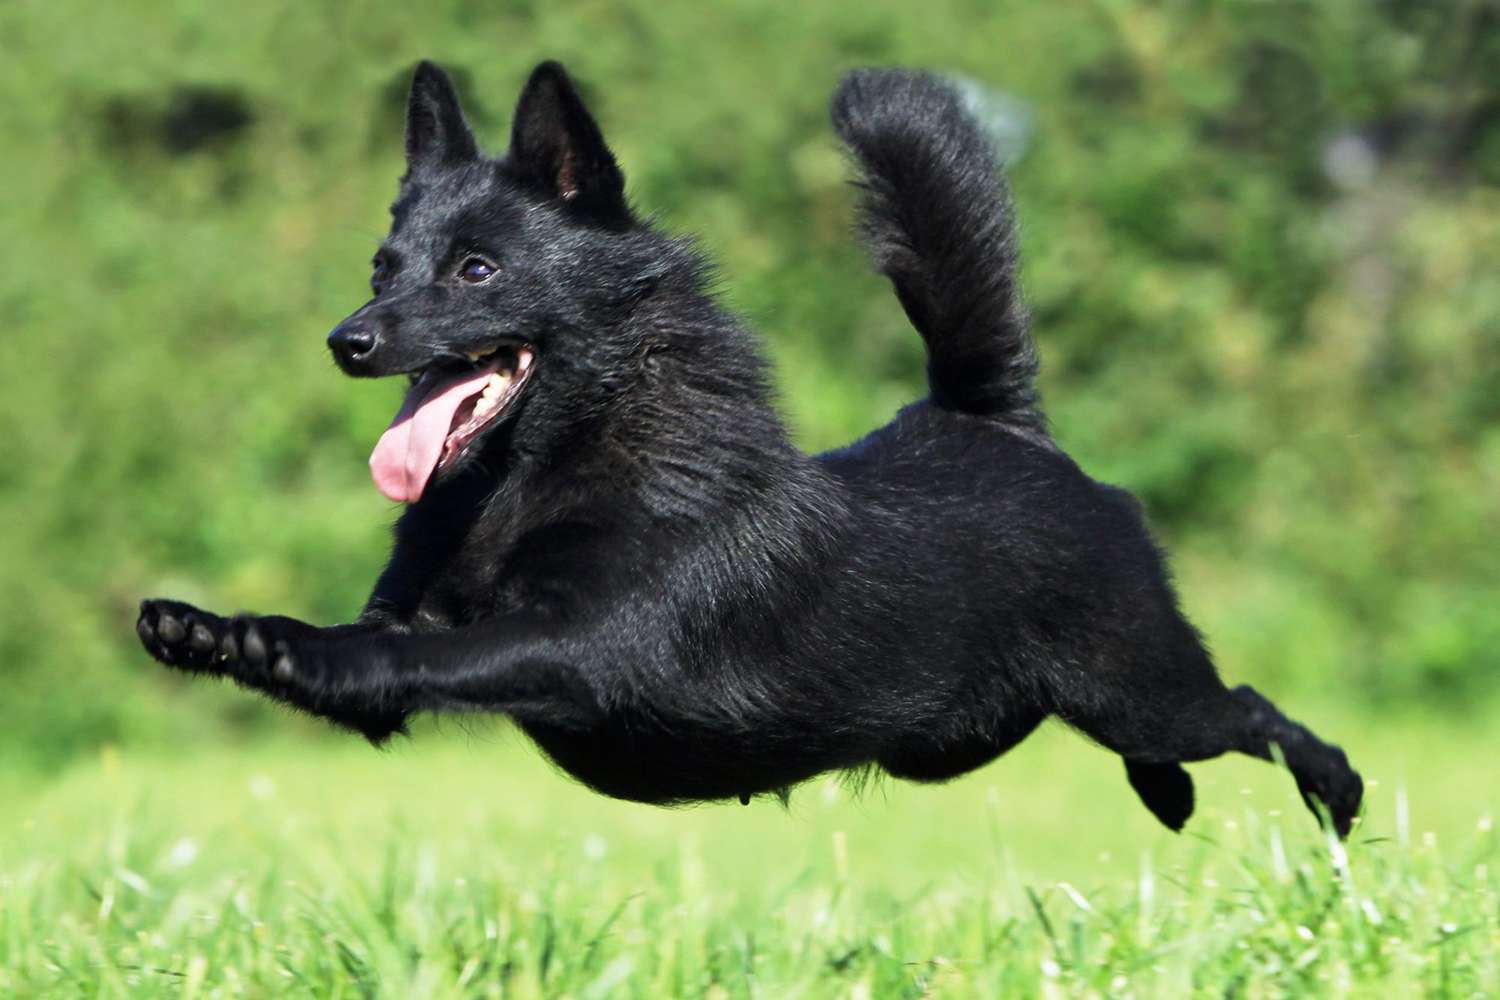 Schipperke puppy leaping through the air